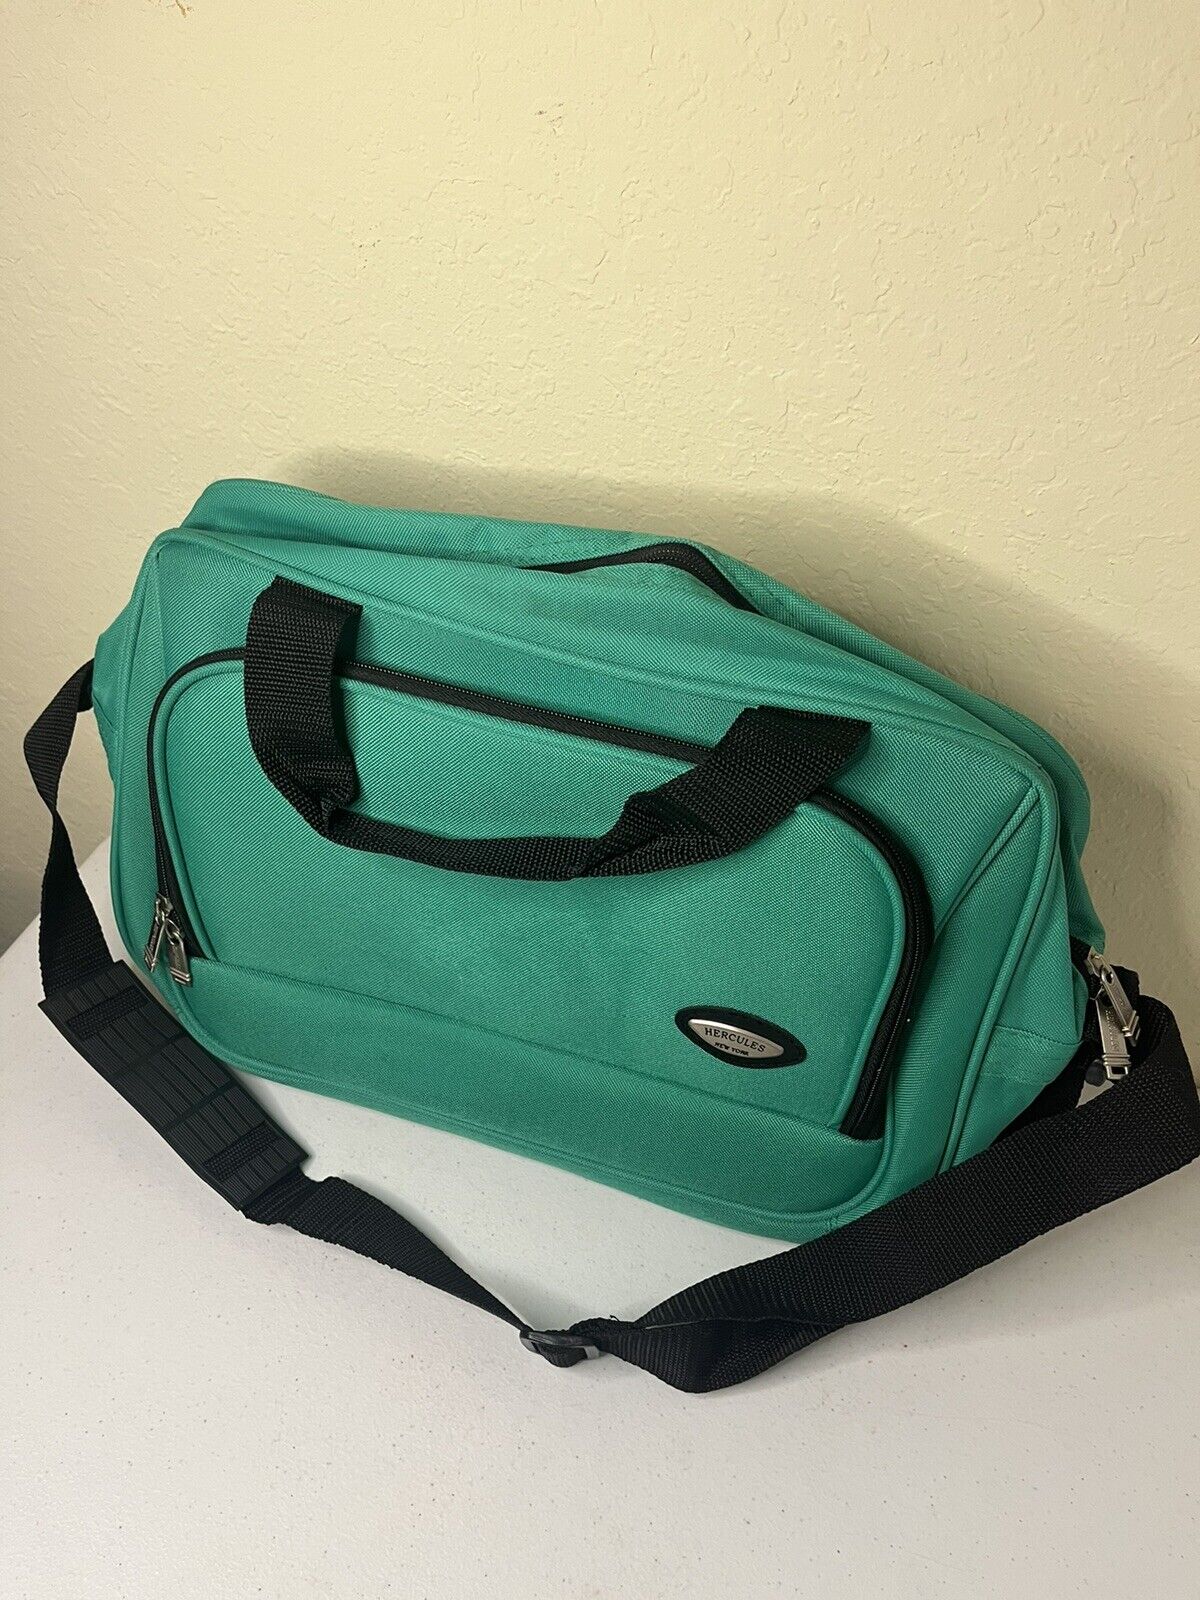 HERCULES NEW YORK Laptop Bag Shoulder Messenger Tote Bag Carry On Laptop 16x12x5